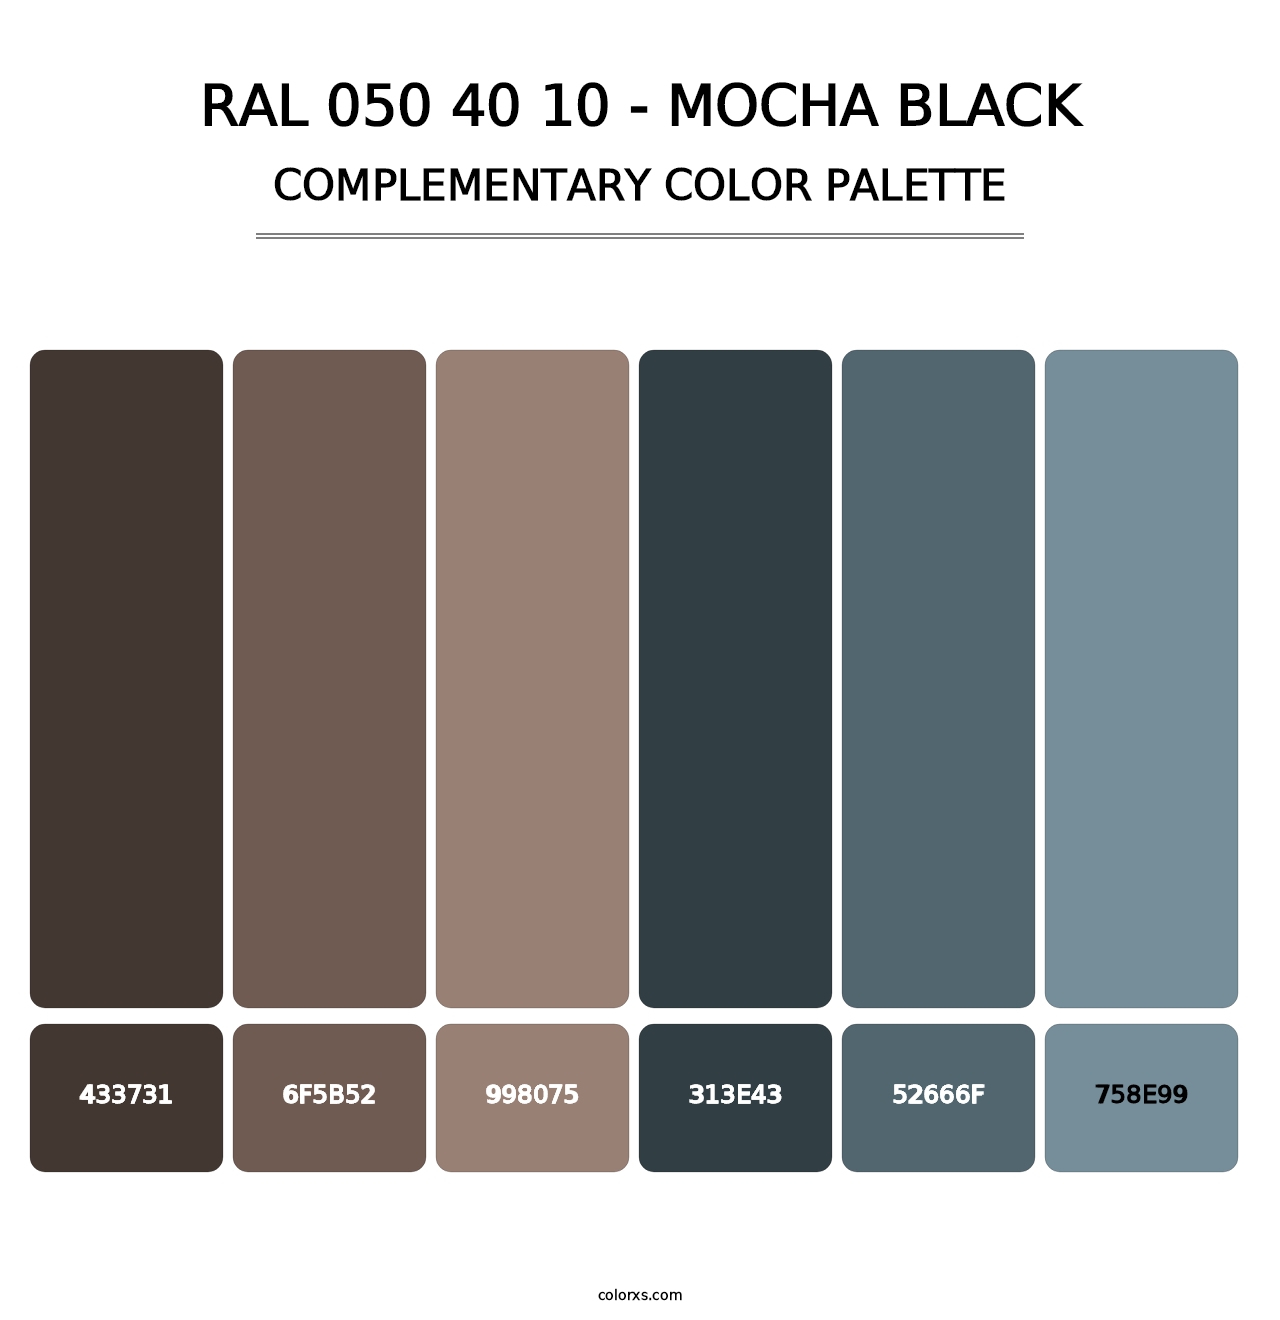 RAL 050 40 10 - Mocha Black - Complementary Color Palette